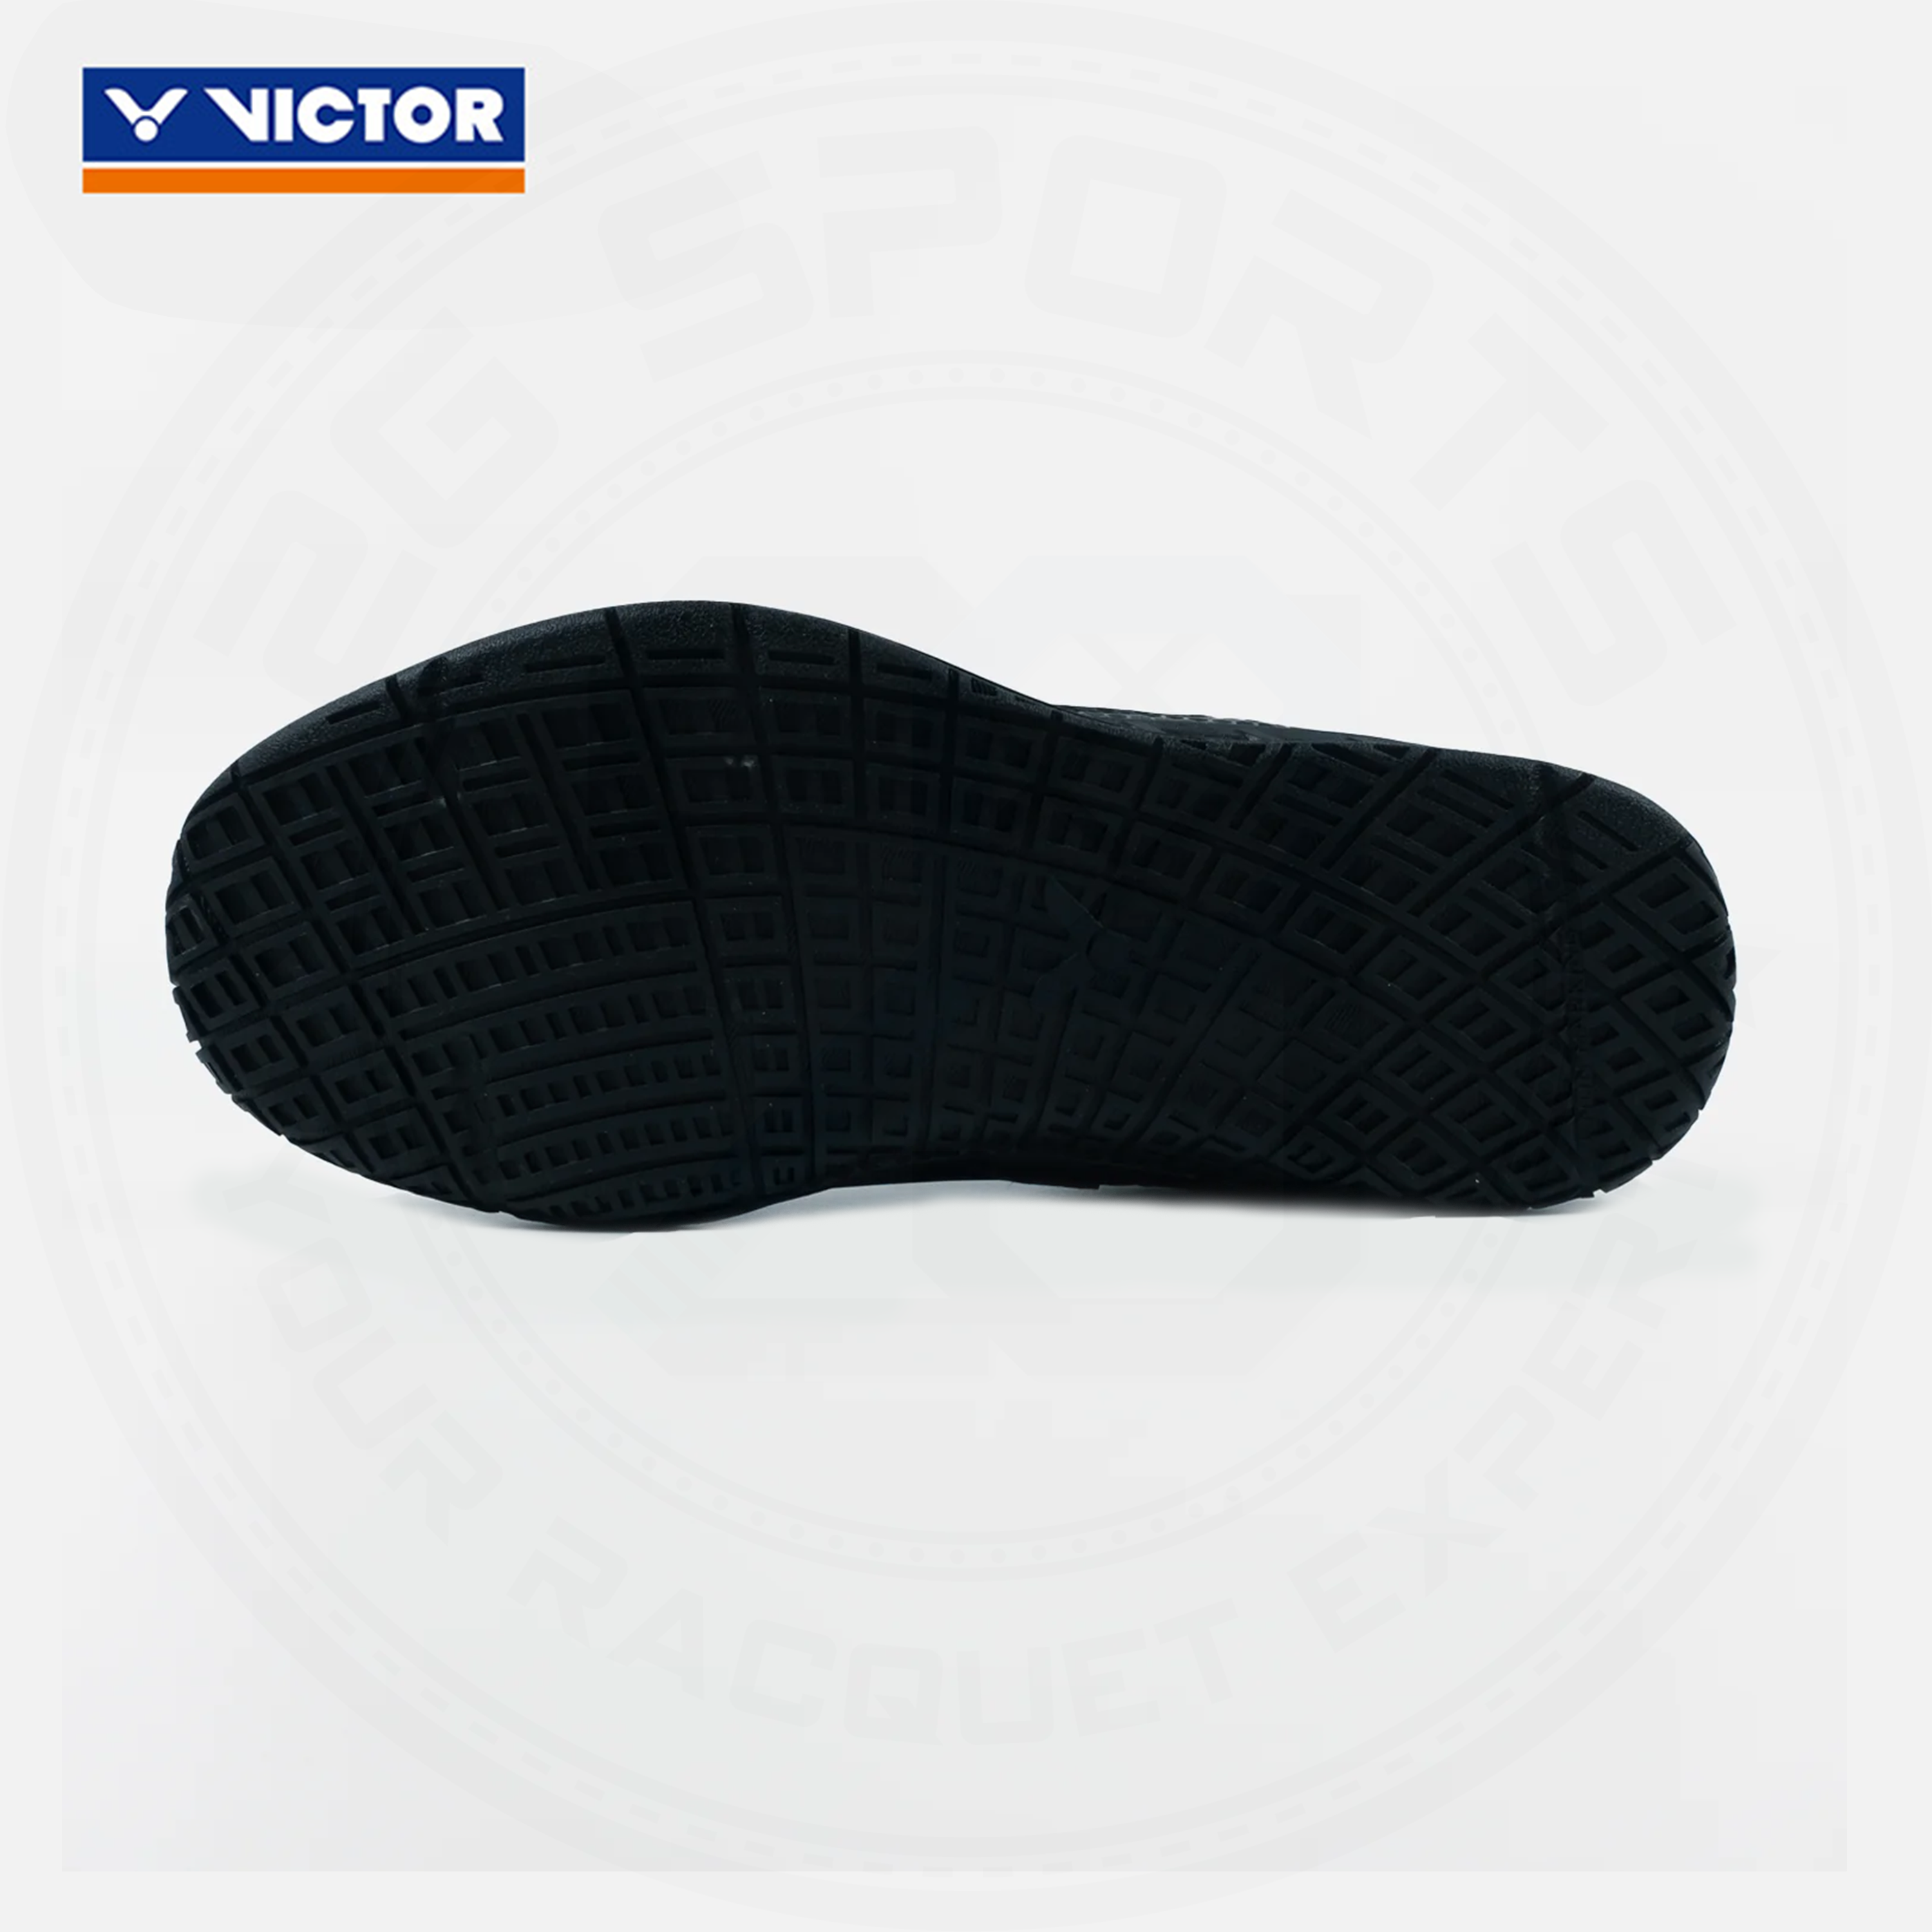 Victor A362III C Badminton Shoes Black MEN'S